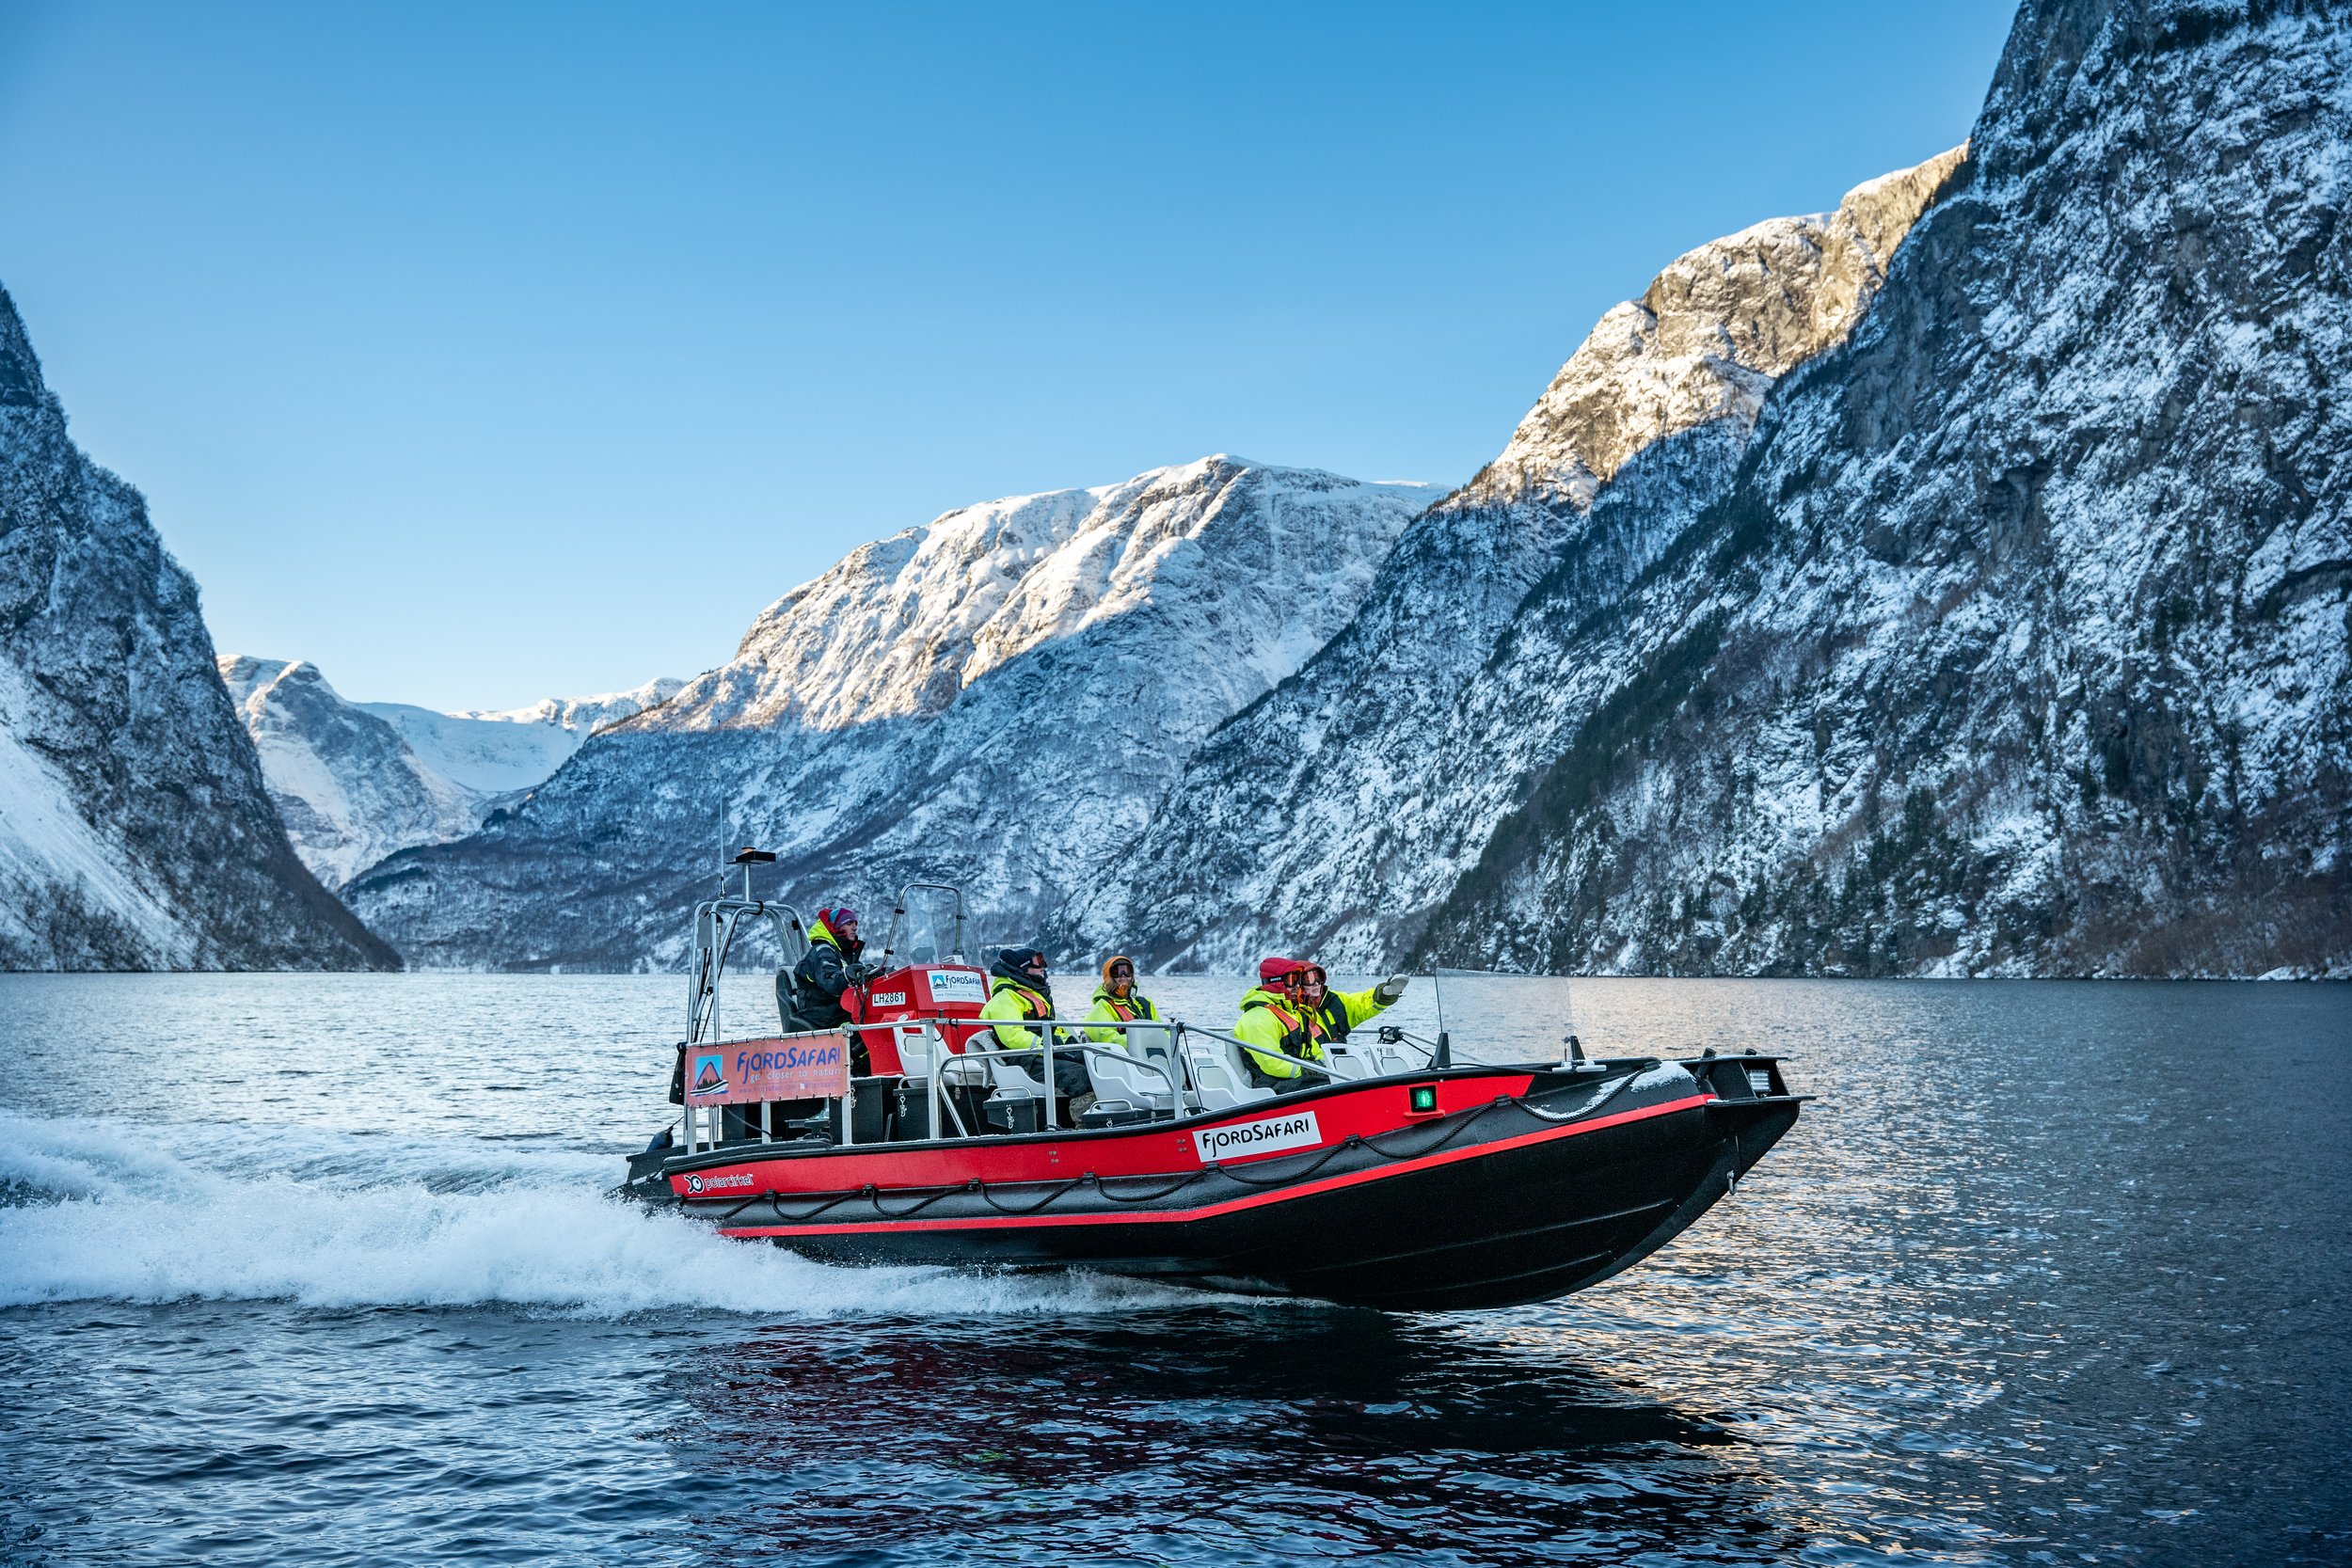 Winter-FjordSafari-GoFjords-P1116124.jpg